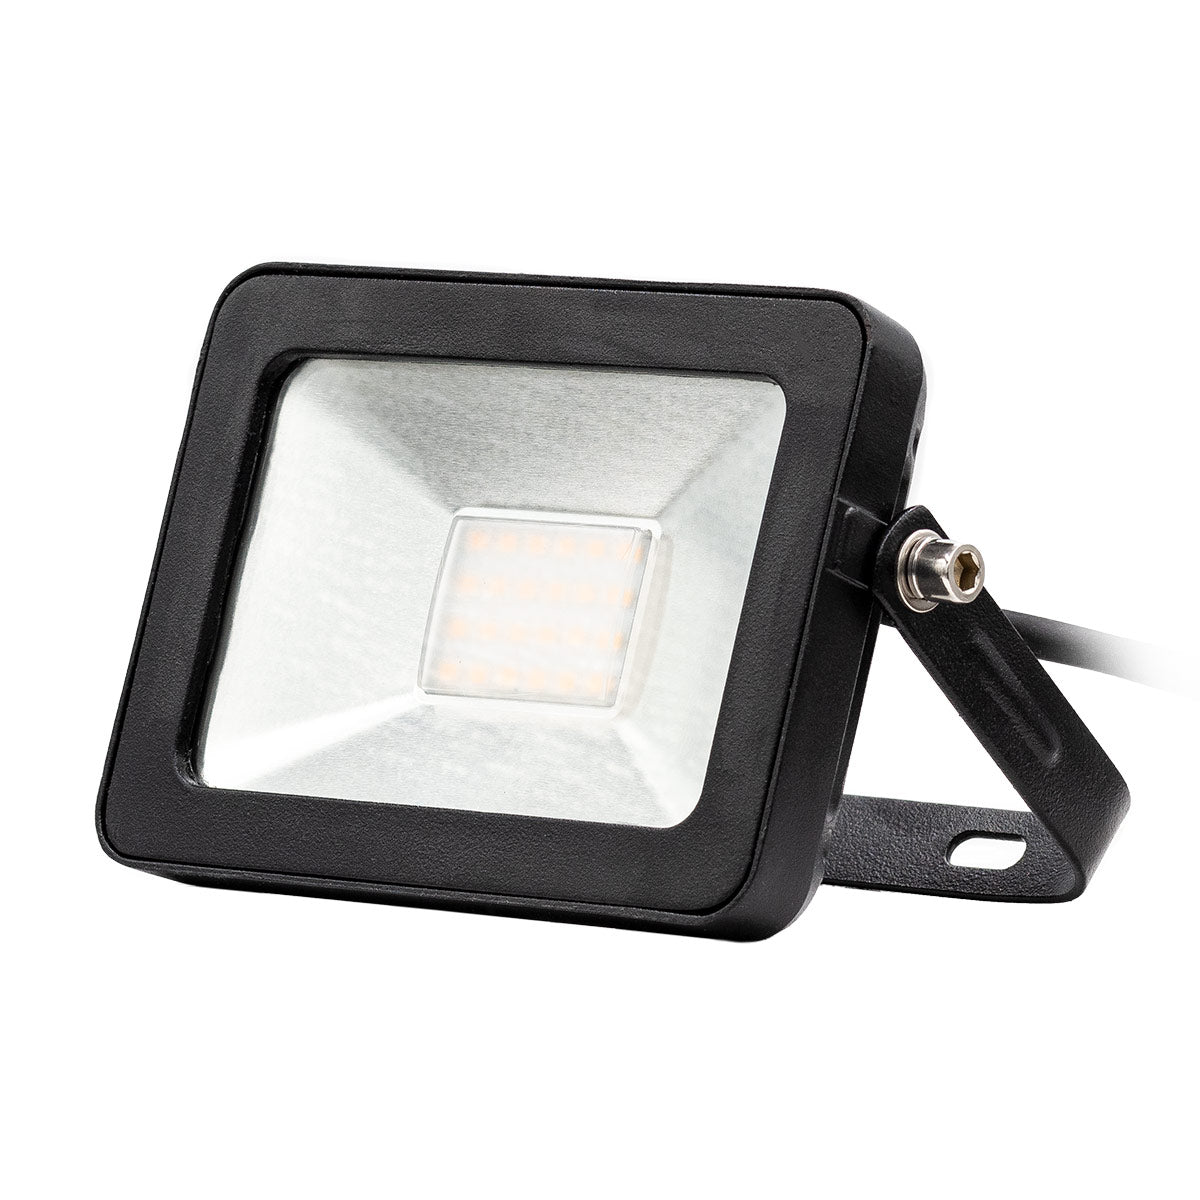 LED Floodlight - FL1012 - Silhouette Lights